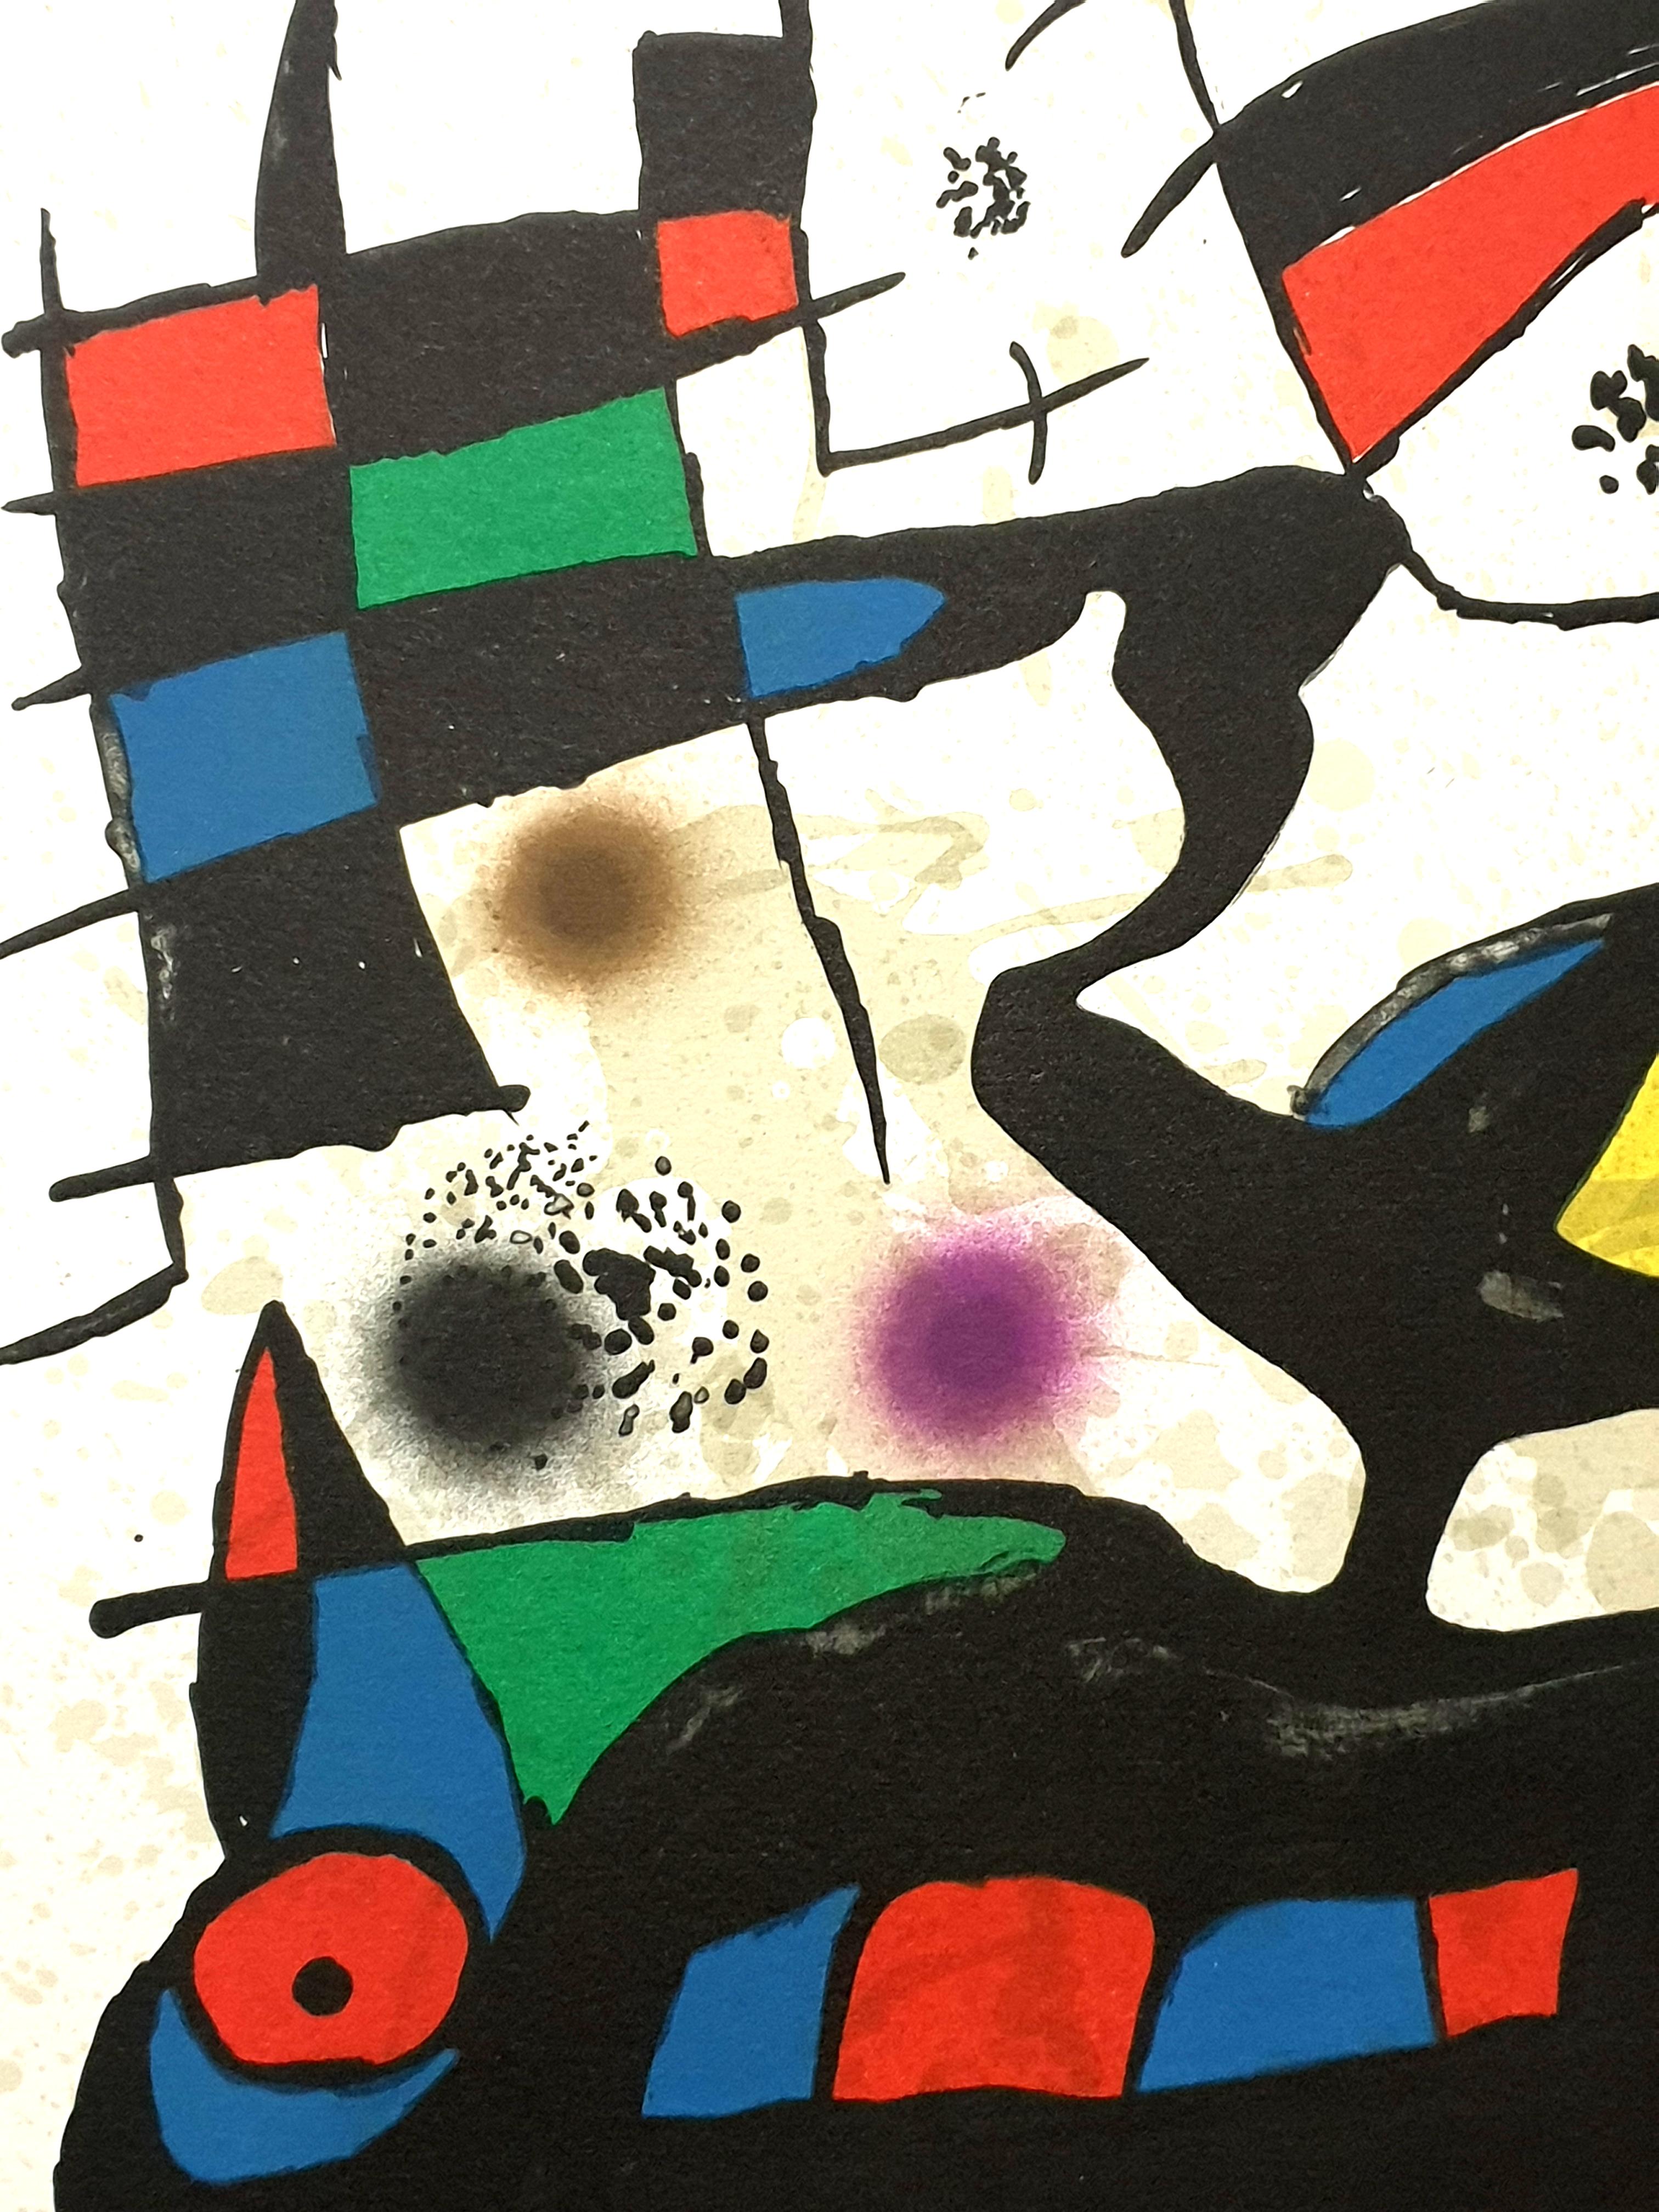 Joan Miro - “Plate I” from “Oda à Joan Miró” - Lithograph - Abstract Print by Joan Miró